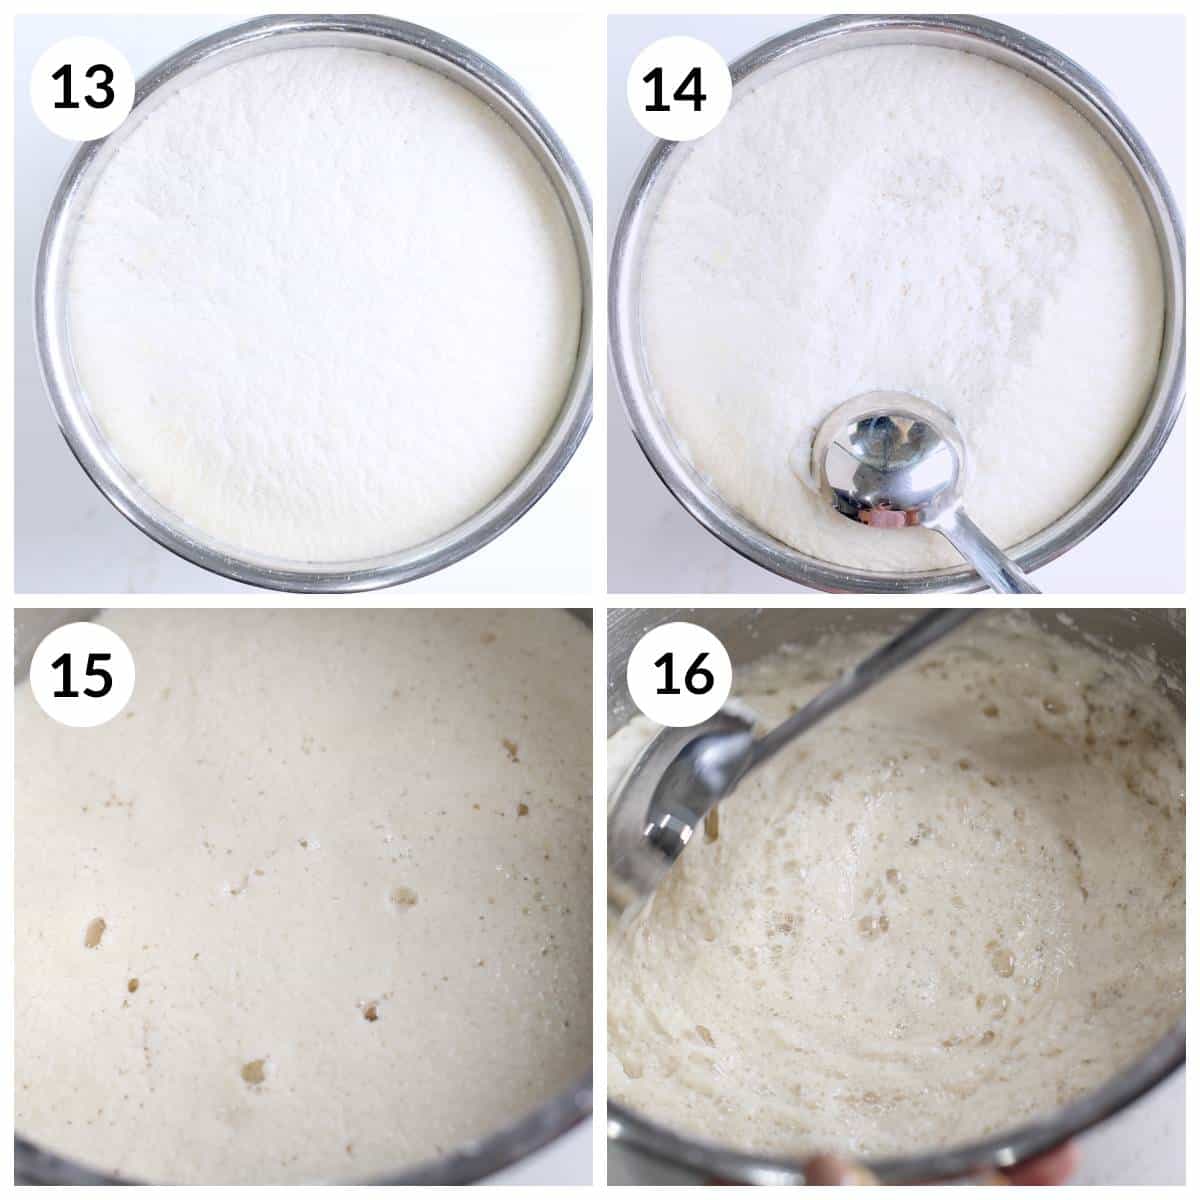 Steps showing Fermentation of idli batter using rice and idli rava